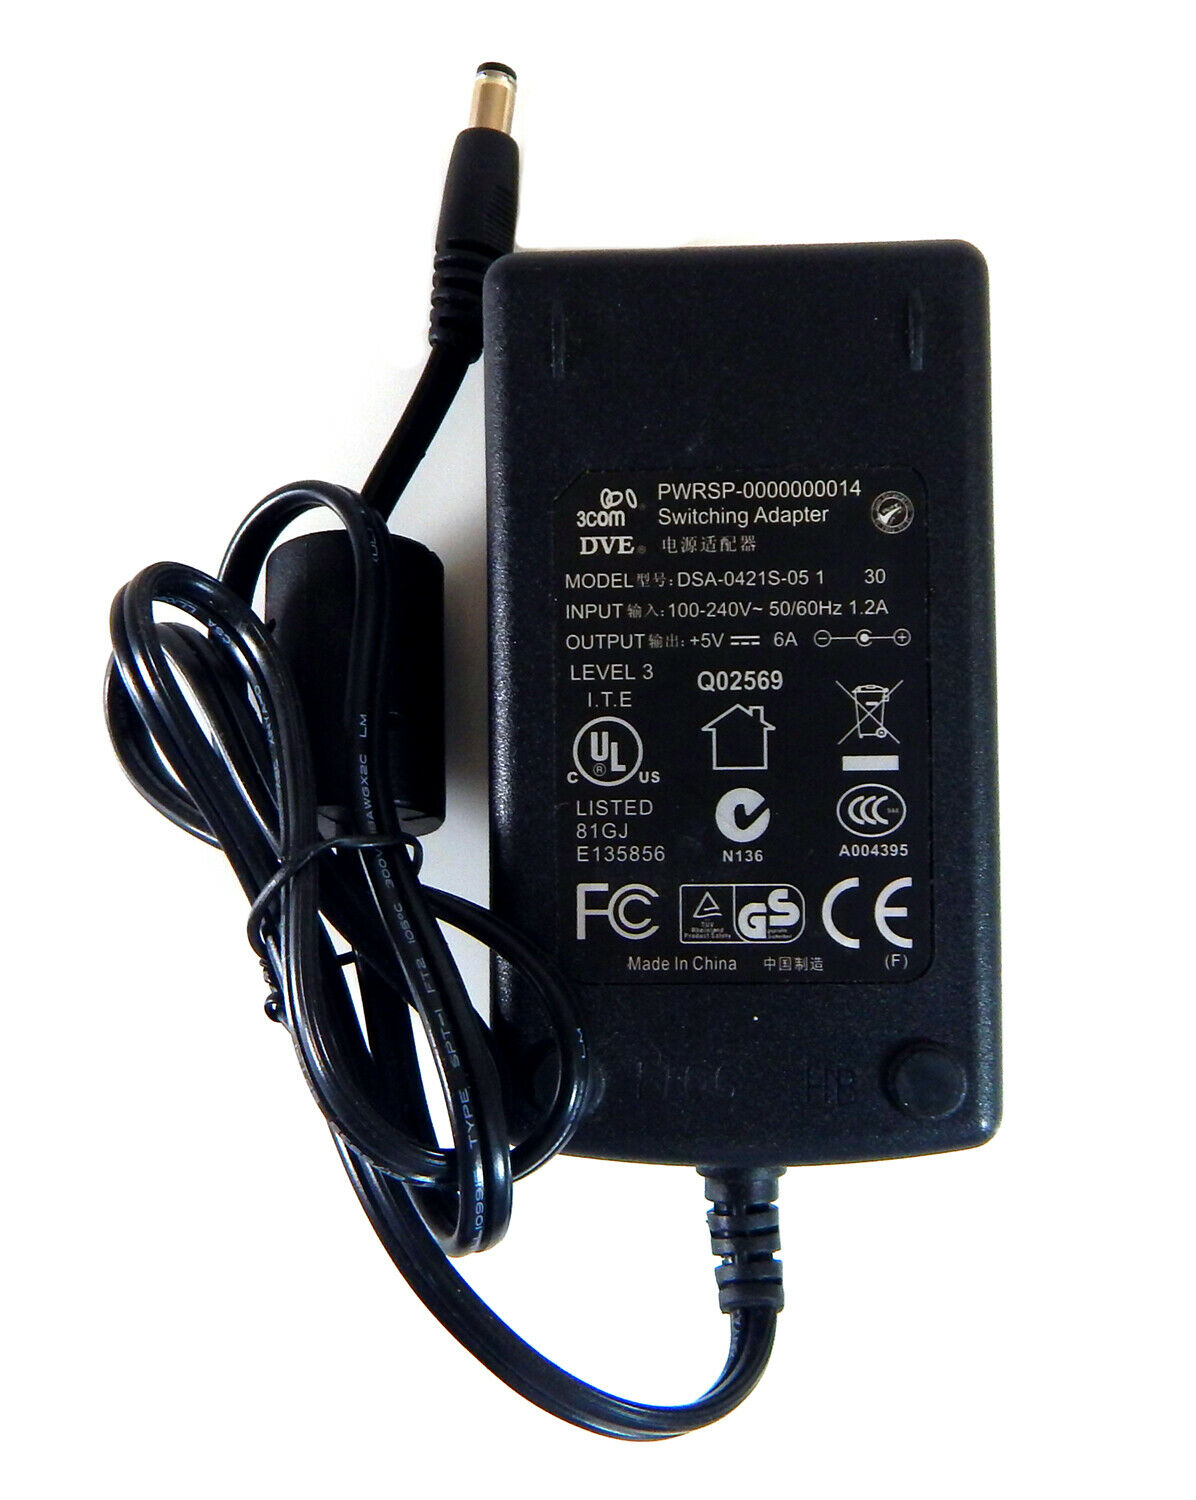 DVE 3COM 5VDC 6A Switching AC Adapter New DSA-0421S-05 PWRSP-000014 MPN: DSA-0421S-05 Brand: 3Co